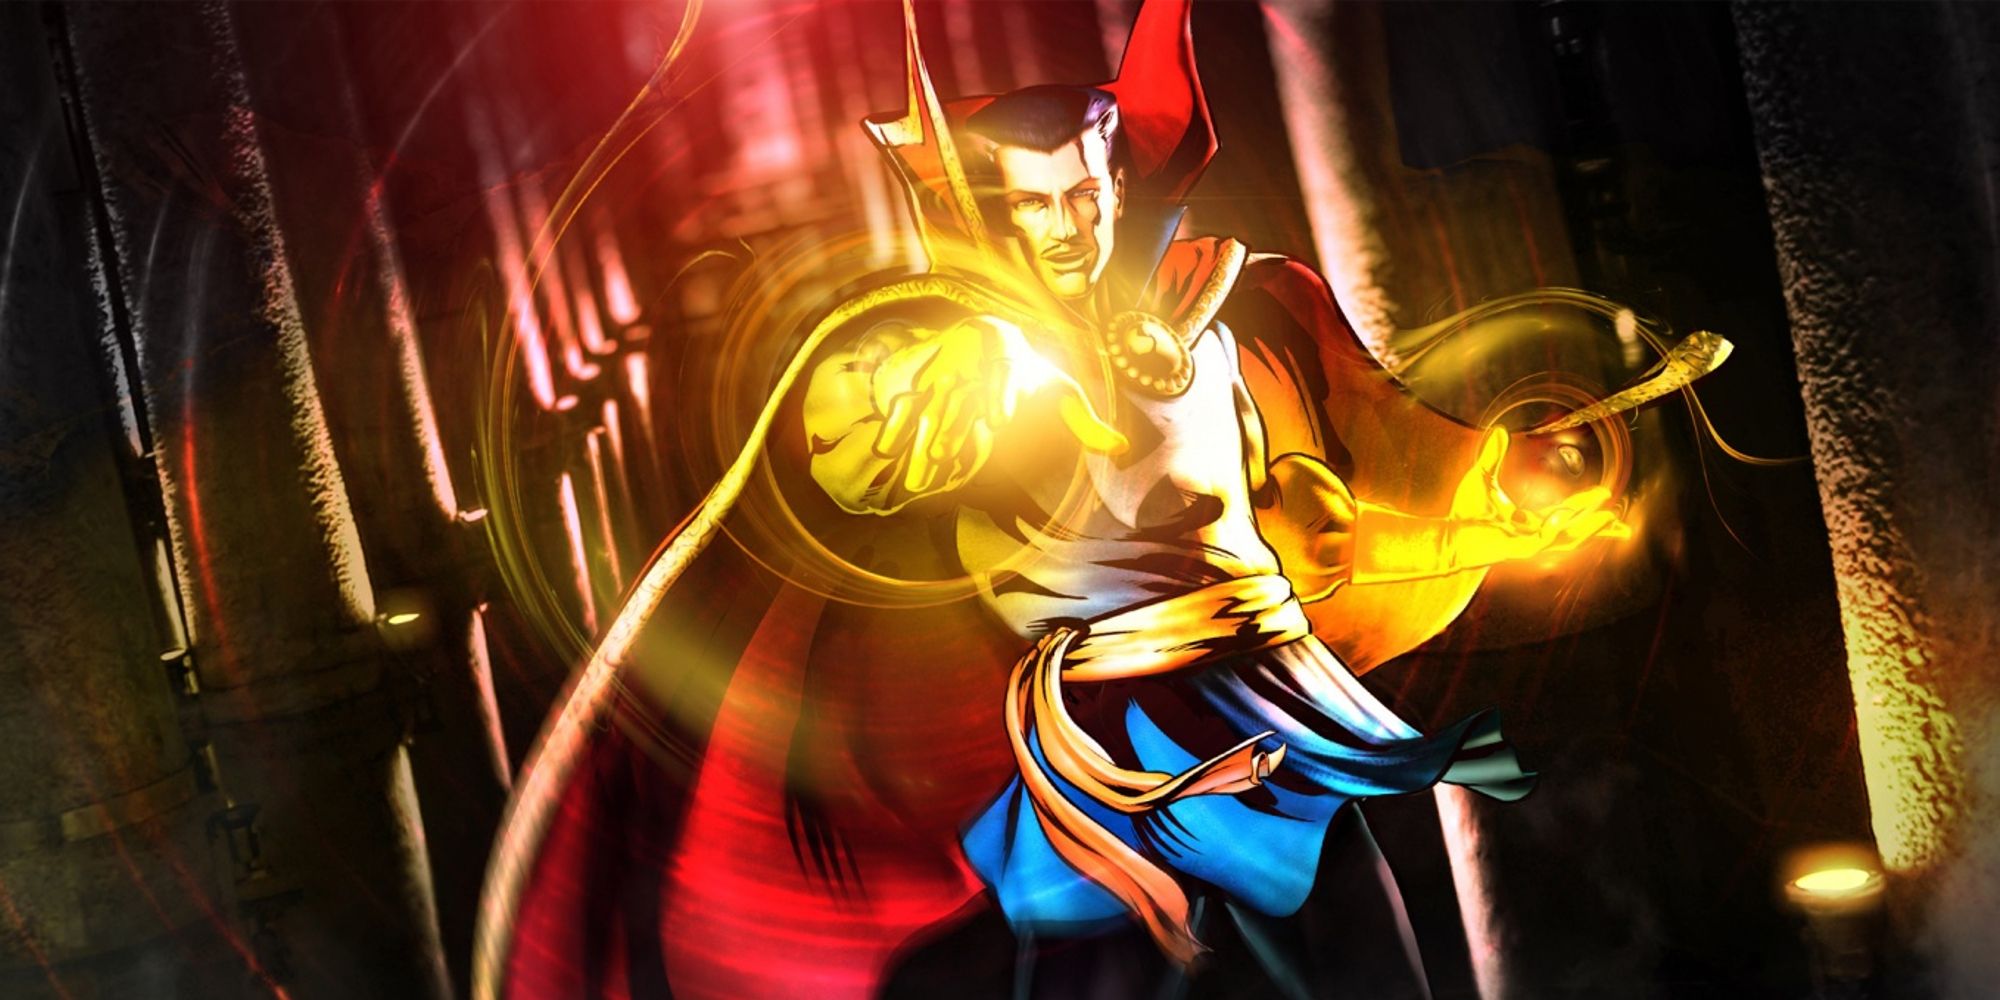 Doctor Strange casting a spell in wallpaper for Ultimate Marvel VS Capcom 3